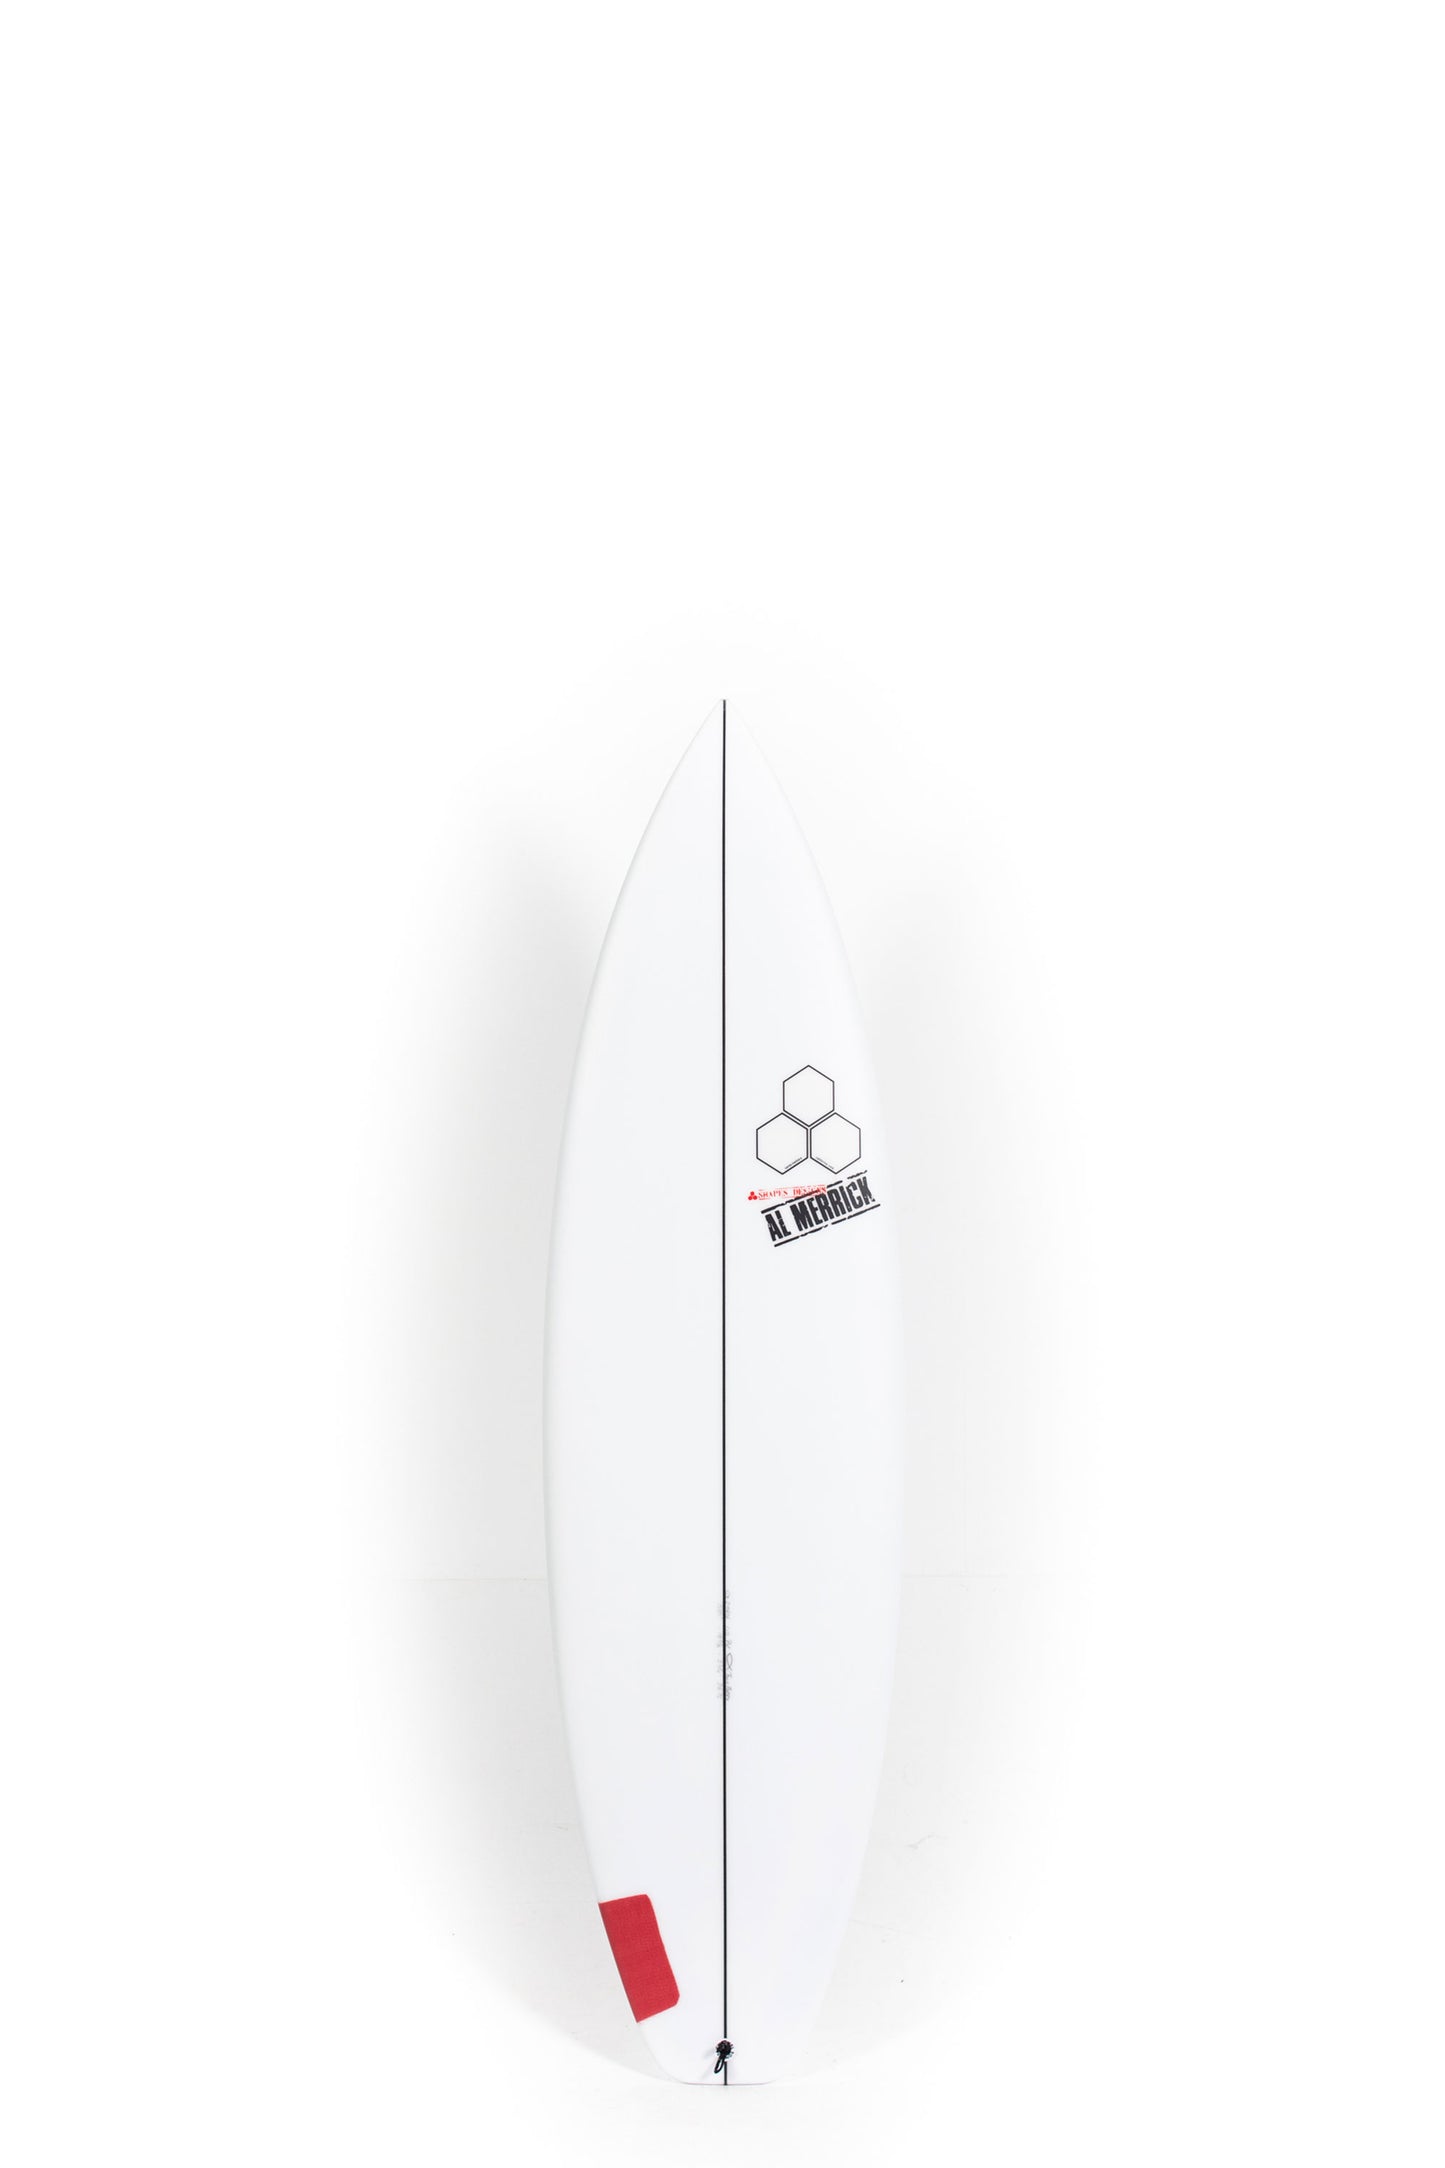 Pukas-Surf-Shop-Channel-Island-Surfboards-Two-Happy-Al-Merrick-5_10